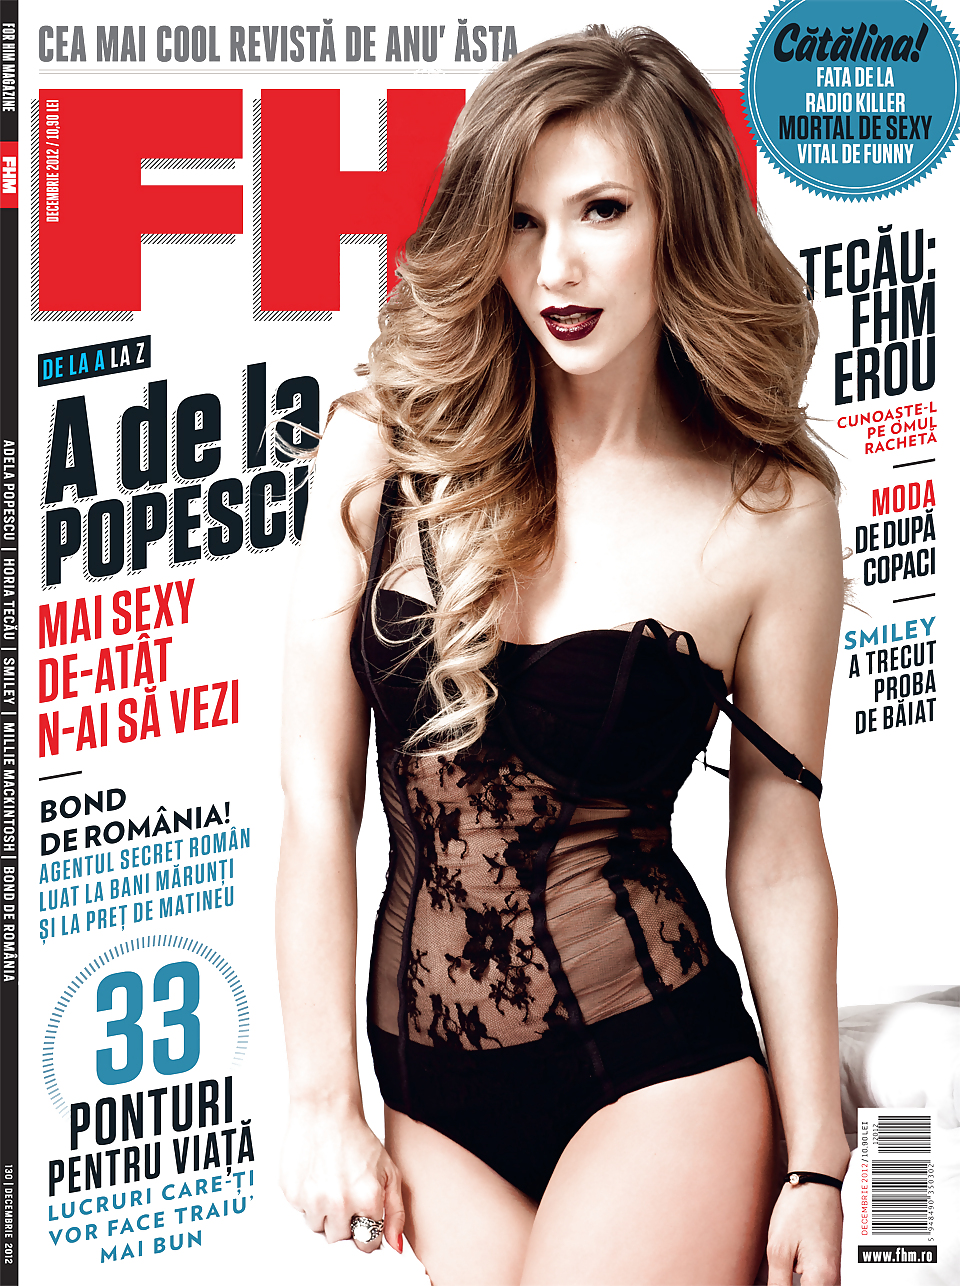 Adela popescu (attrice rumena, cantante) per fhm 2012 
 #23542330